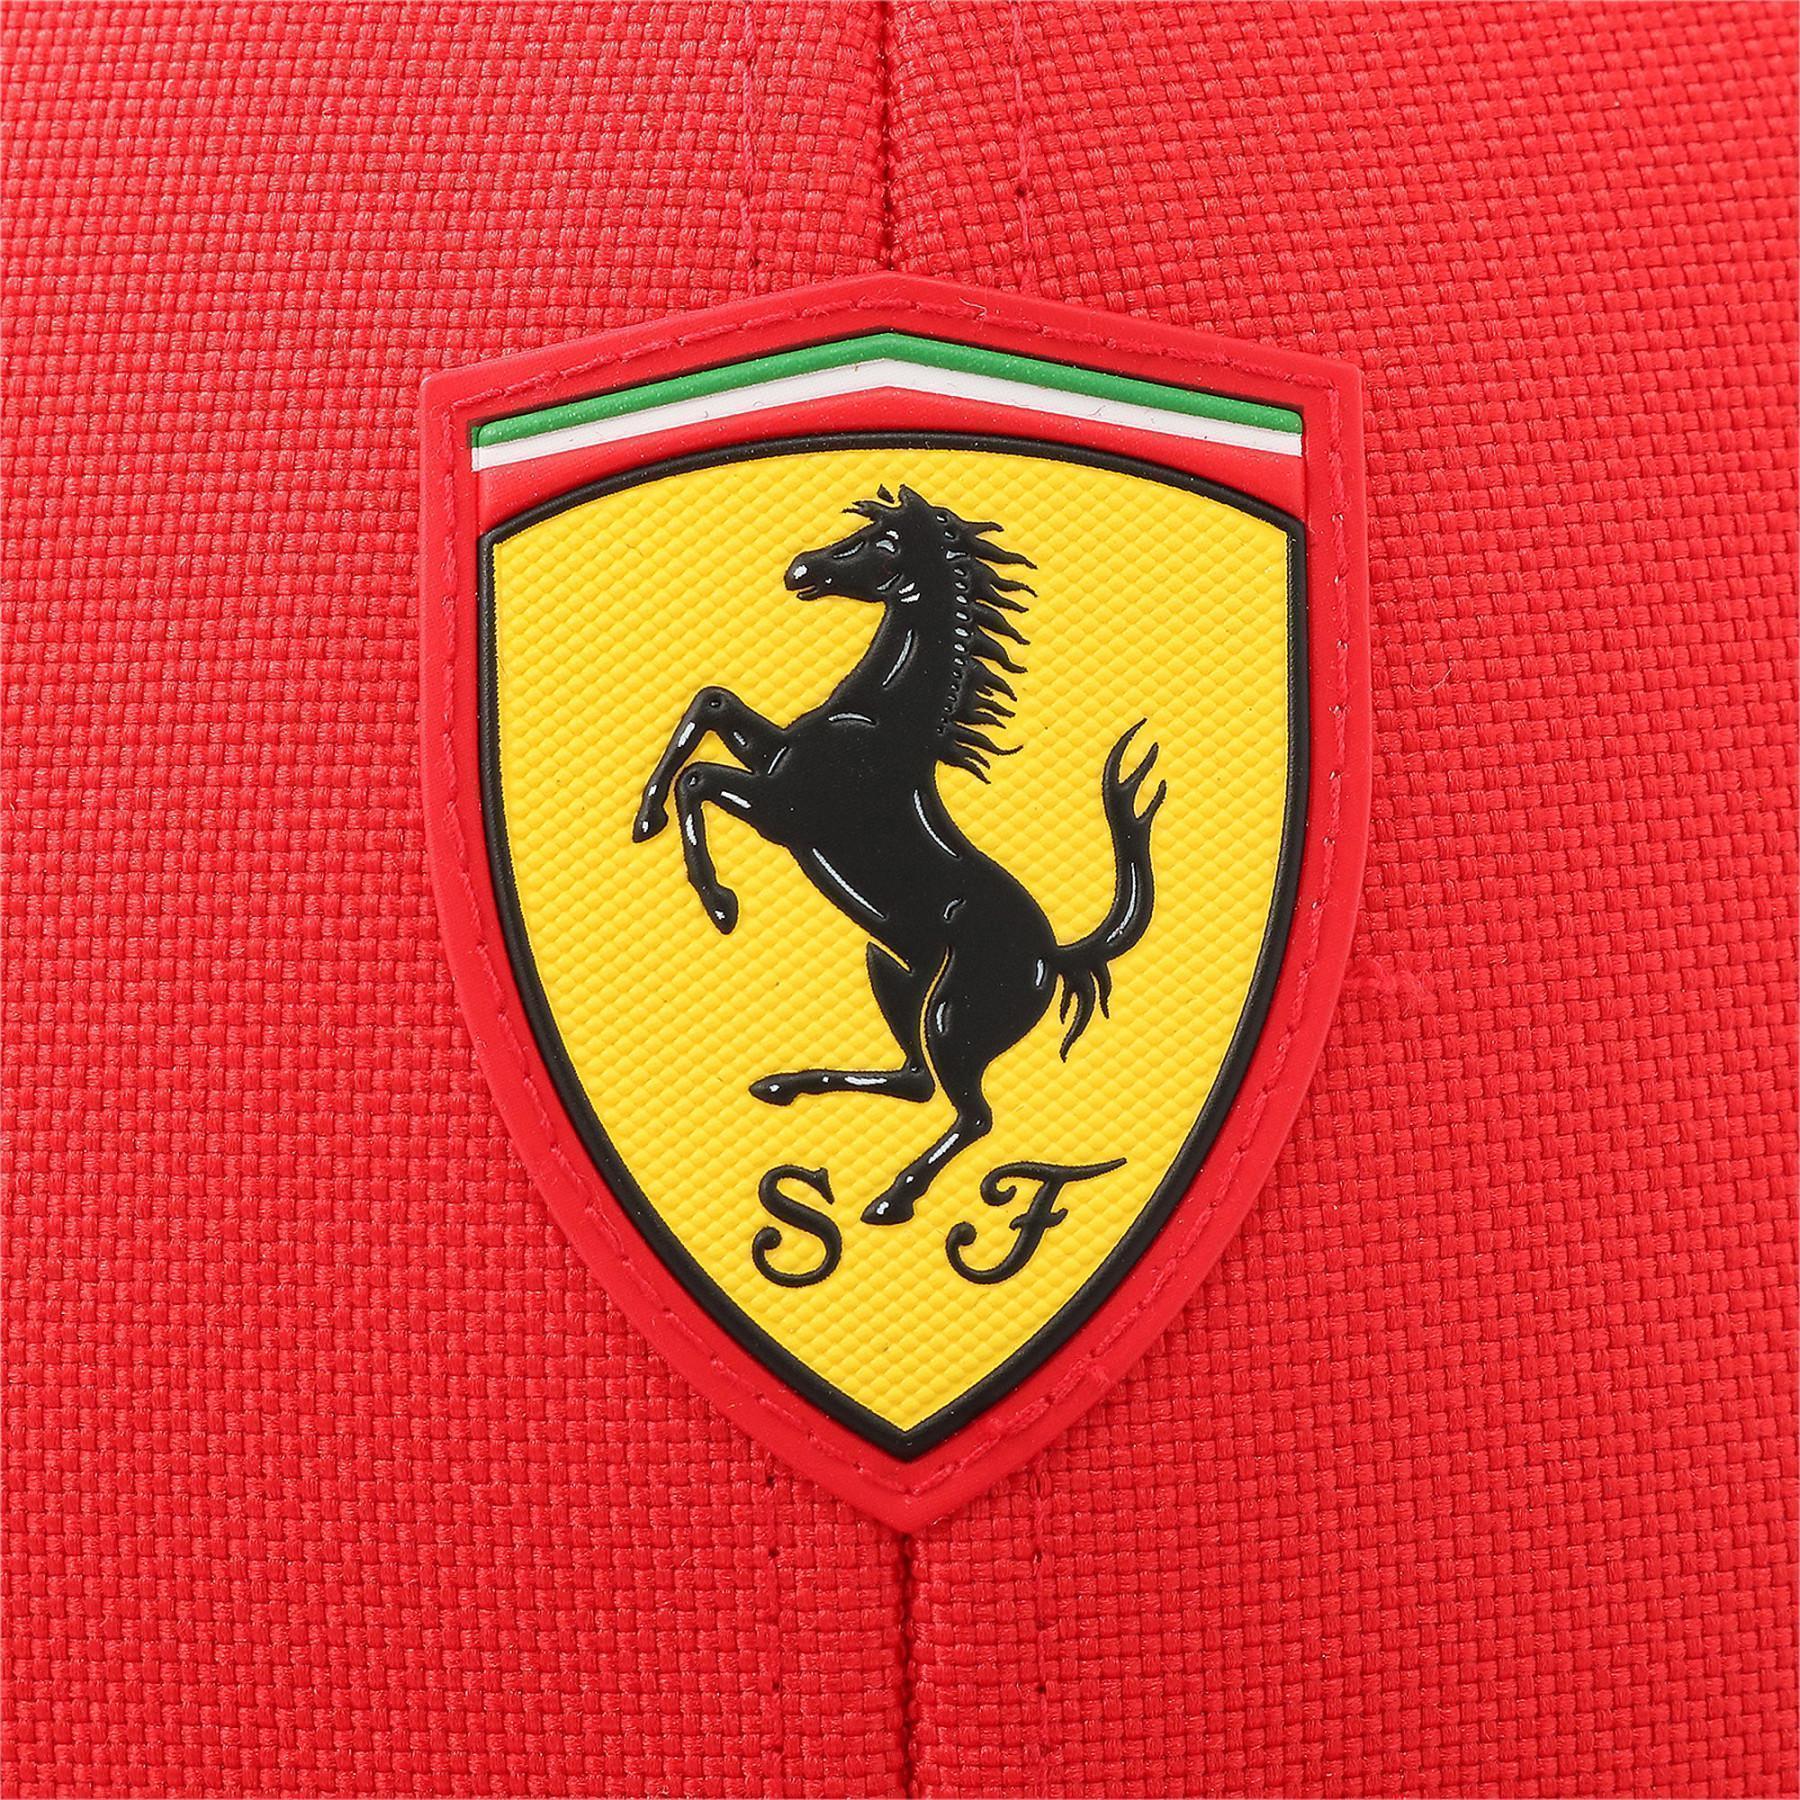 Kappe Ferrari